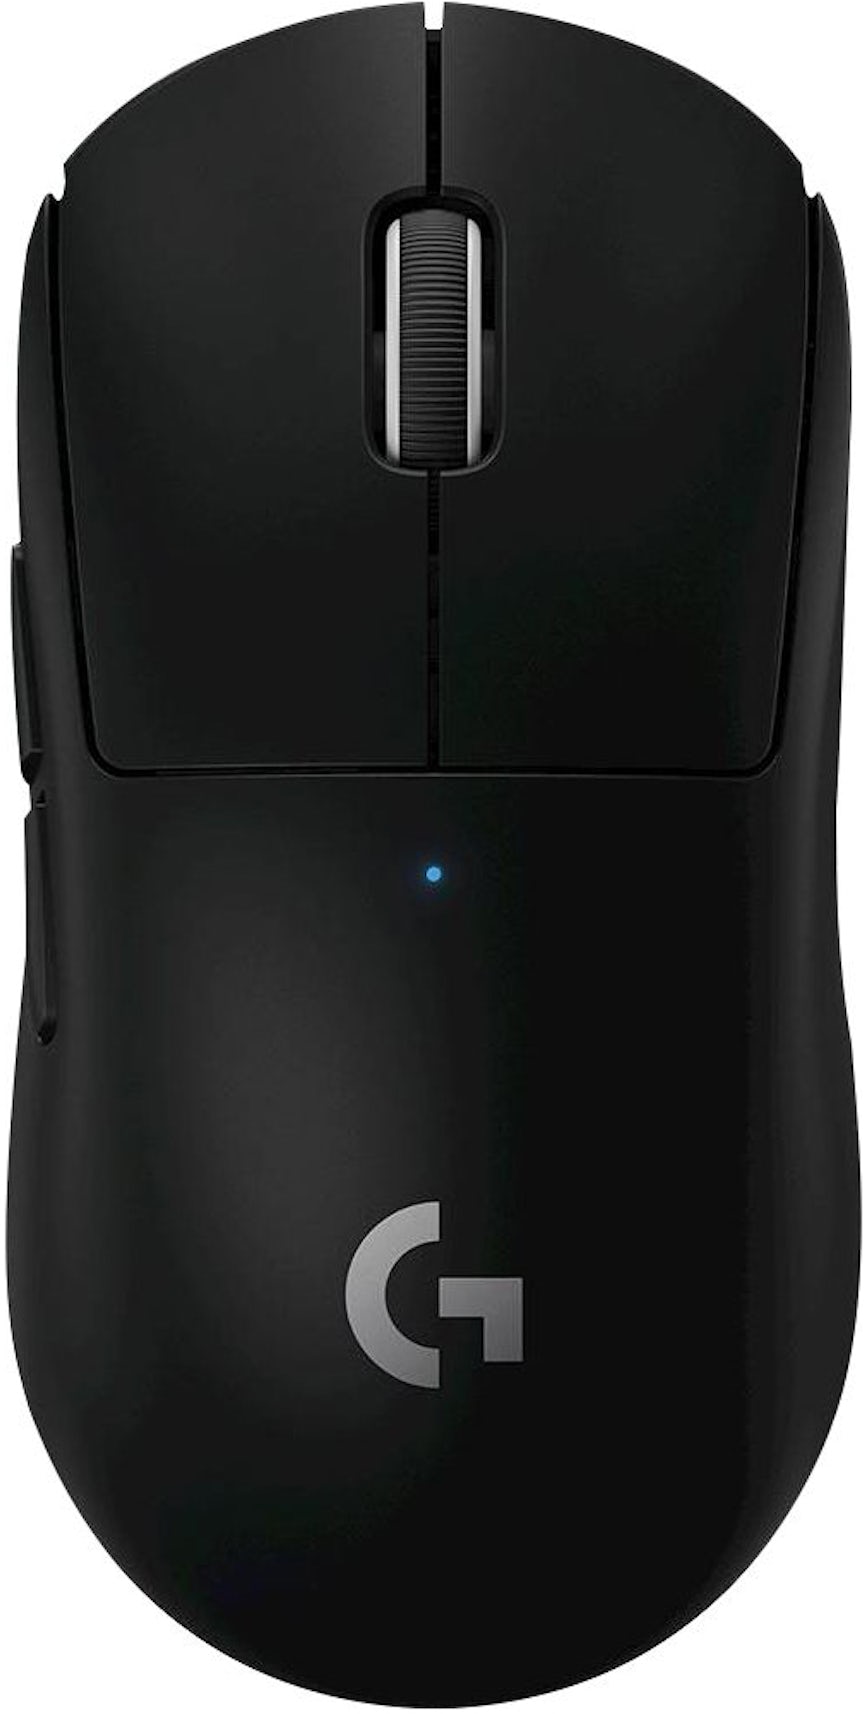 Logitech Pro x Superlight Wireless Gaming Mouse - Black